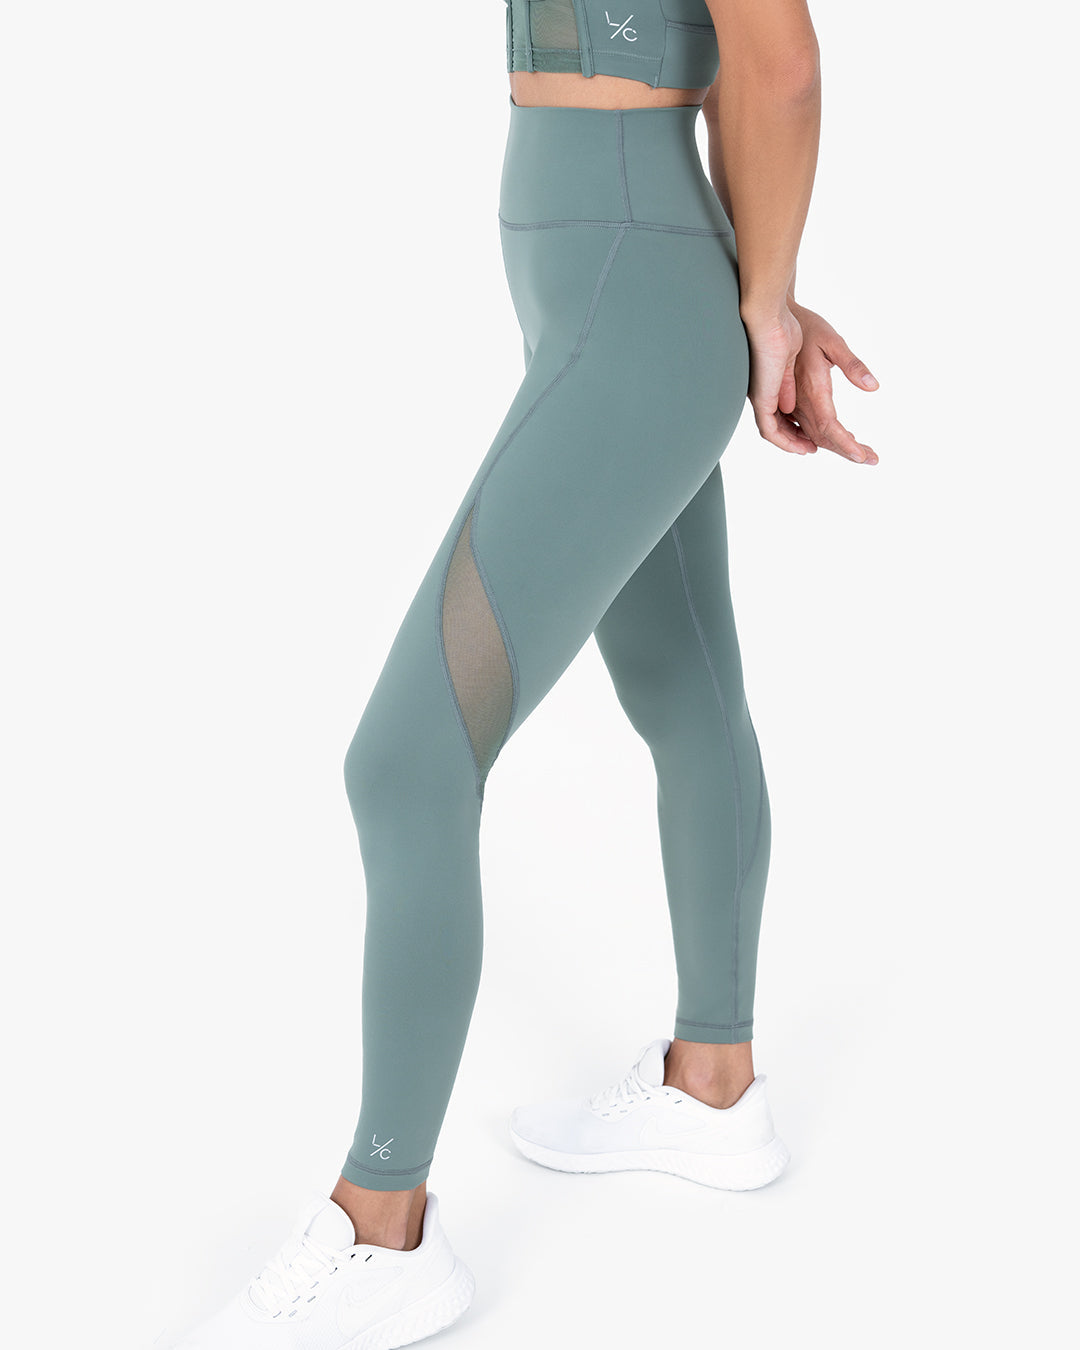 Lace Up Active Mesh Workout Pocket Leggings | Pocket leggings, Sporty look,  Leggings